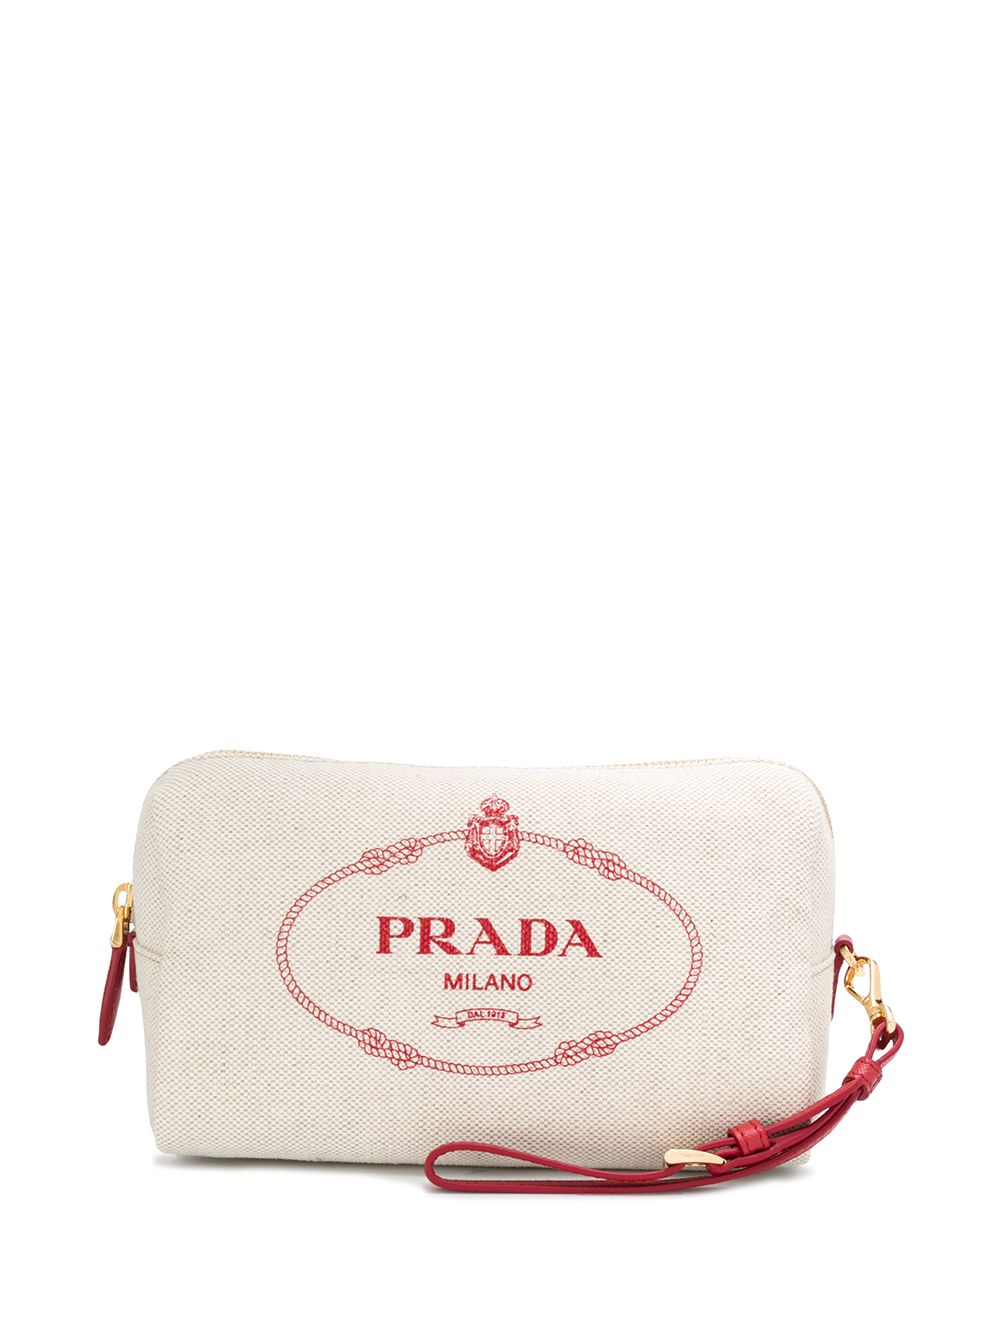 фото Prada косметичка с логотипом